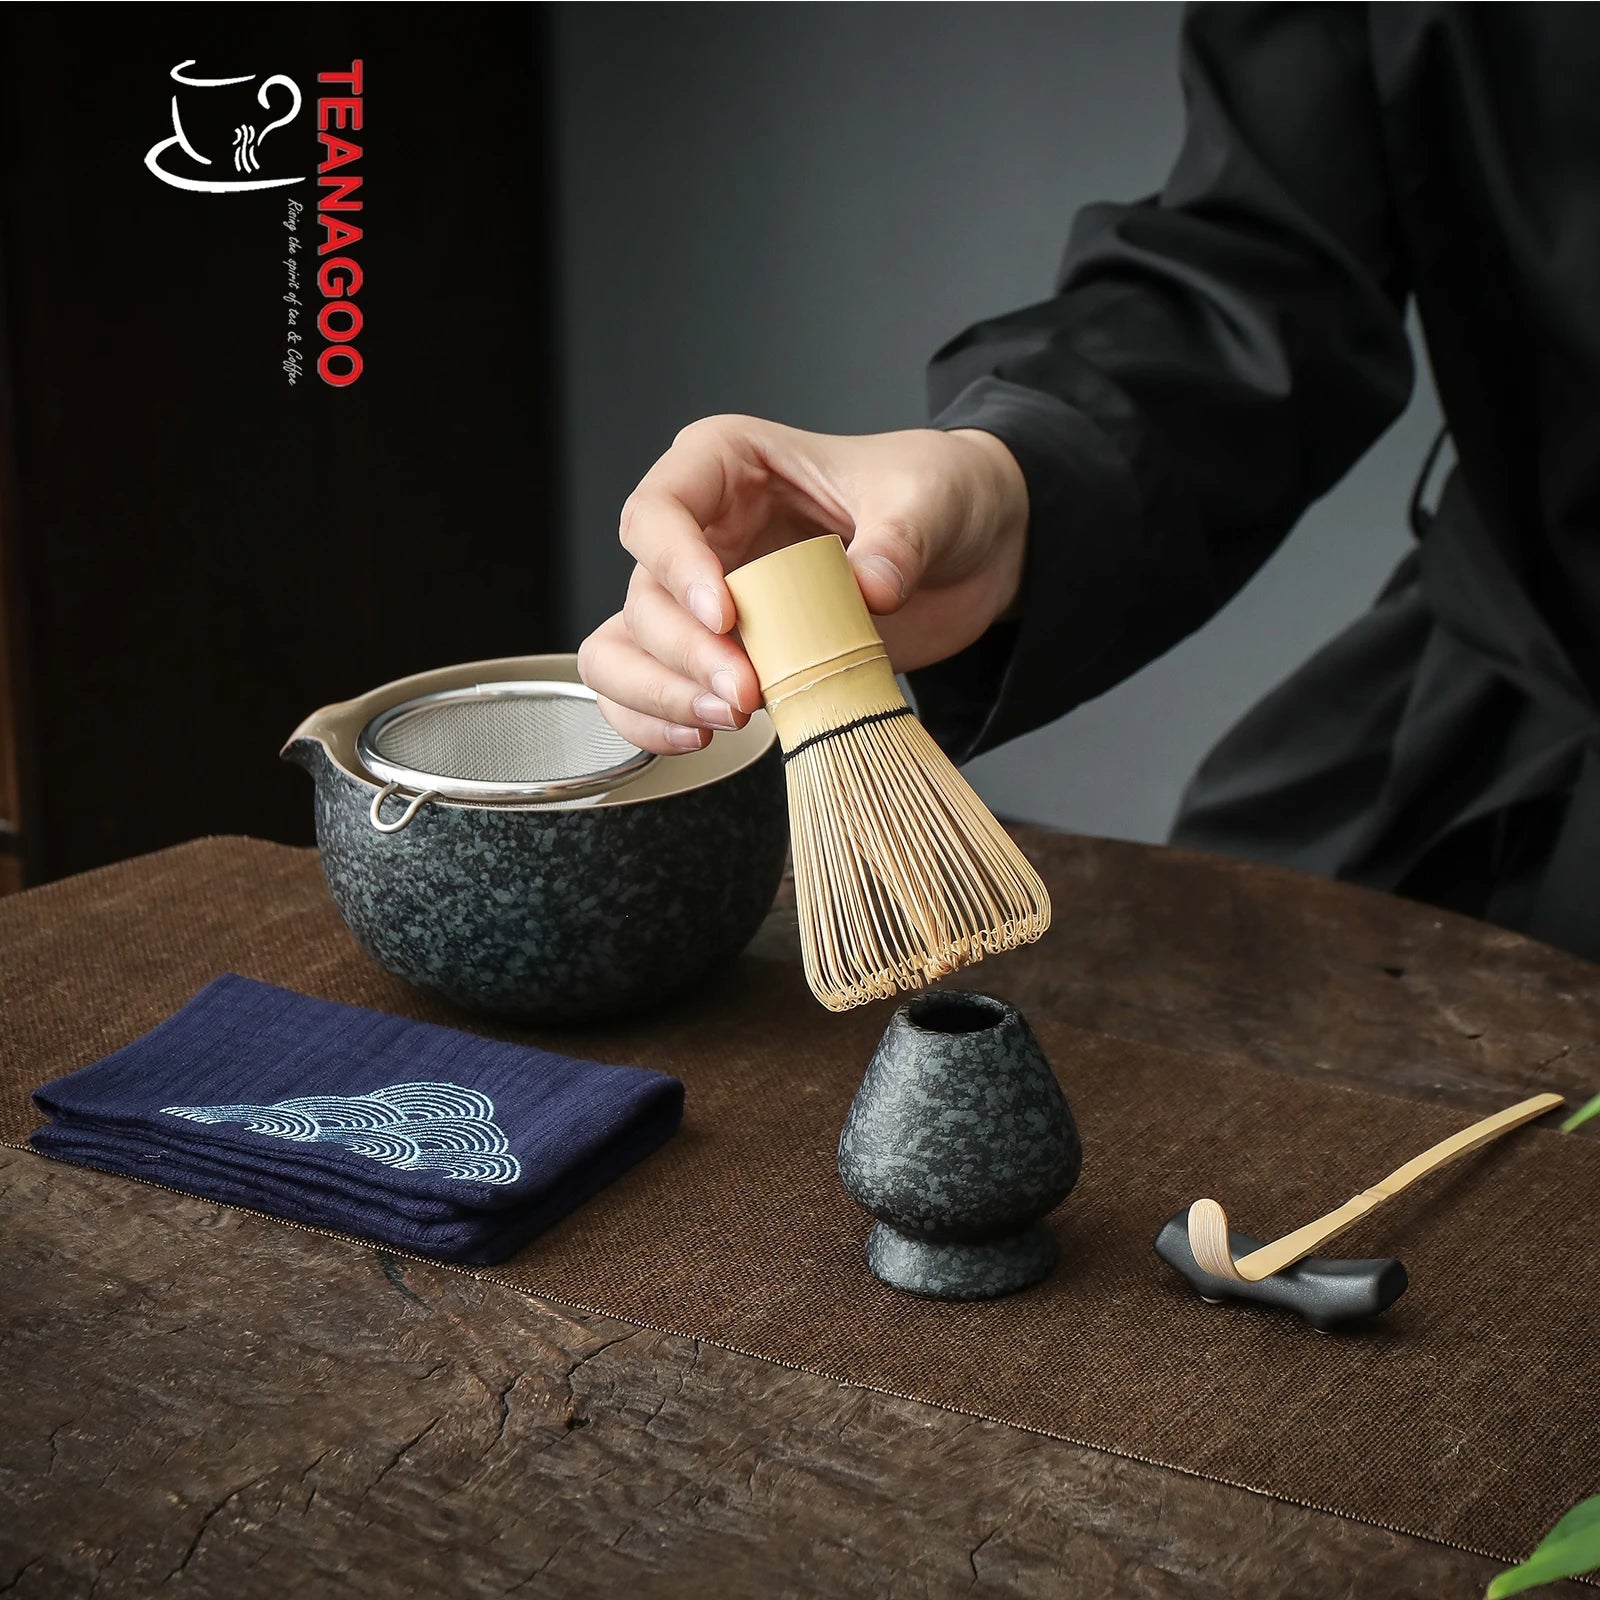 Japanese Matcha Tea Set 8pcs Ceramic Bowl Holder Bamboo Whisk